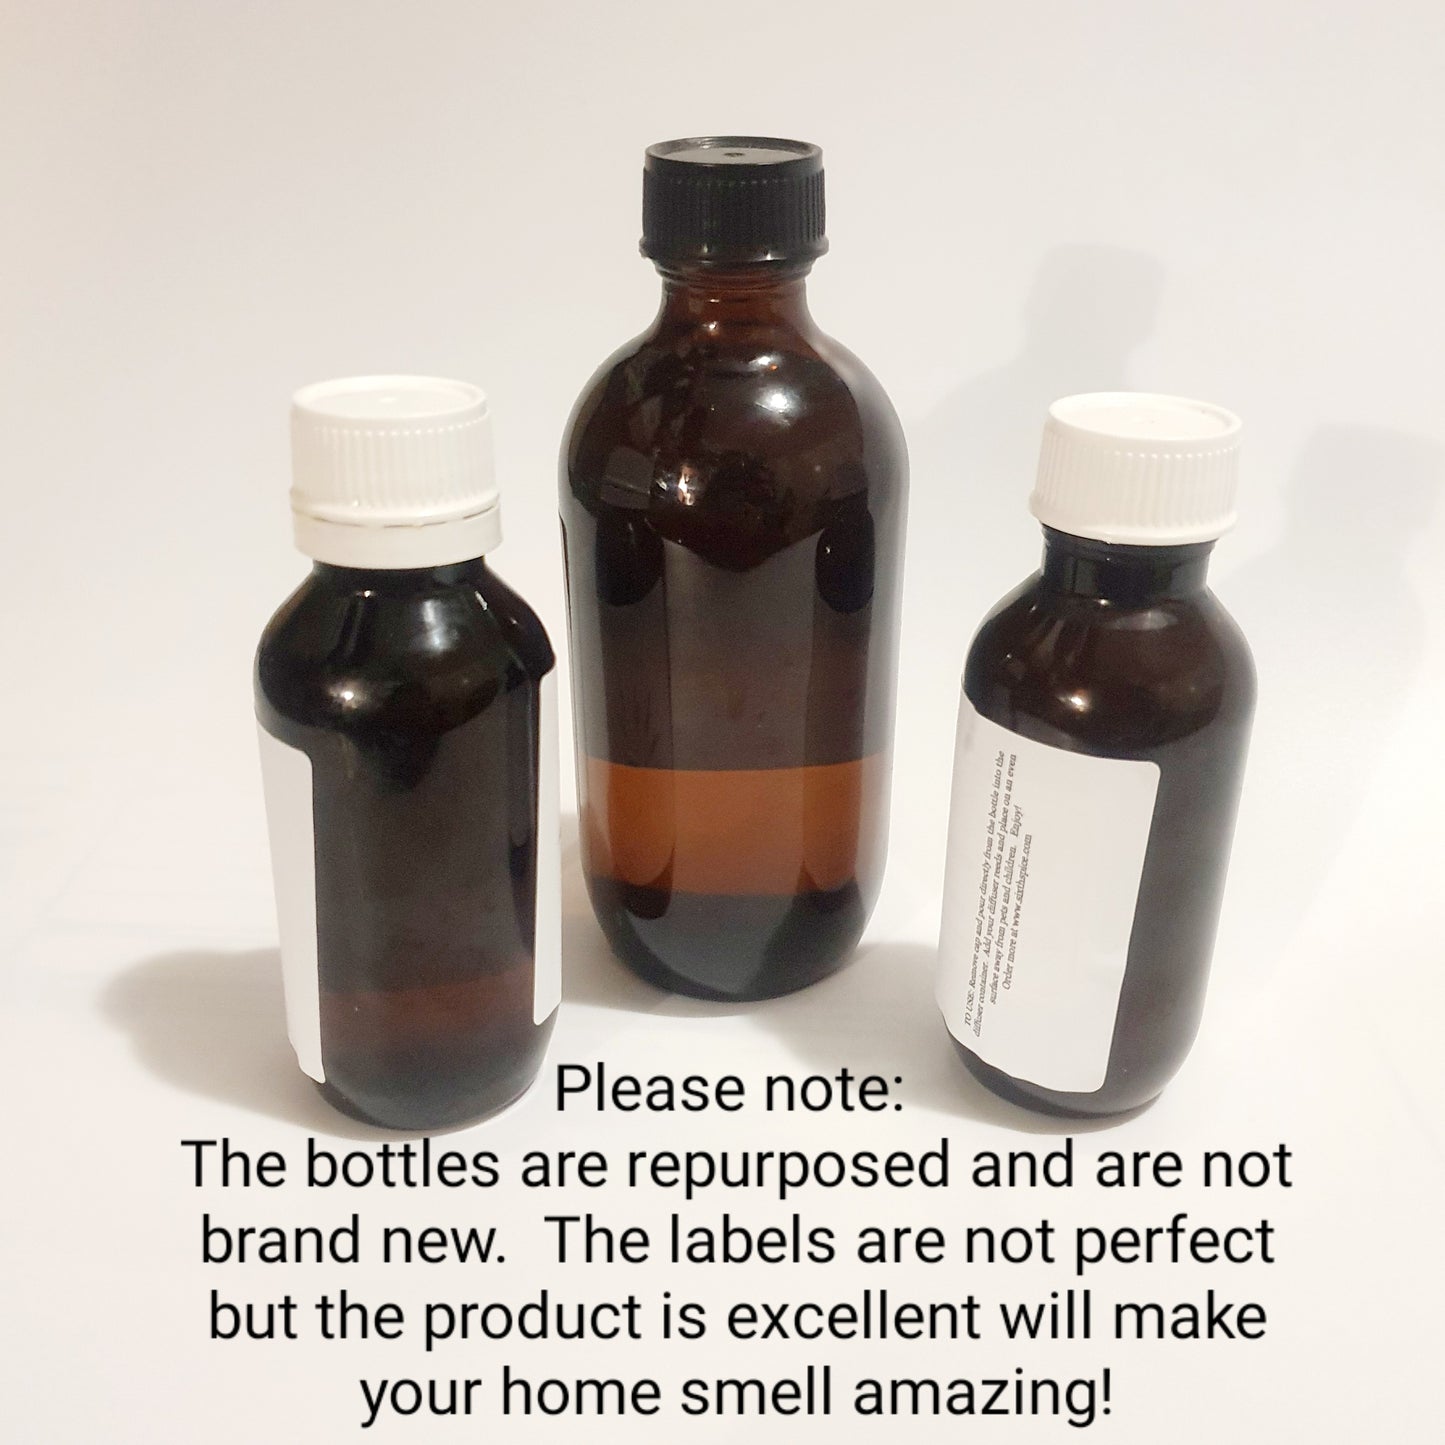 Diffuser refill scent bottles